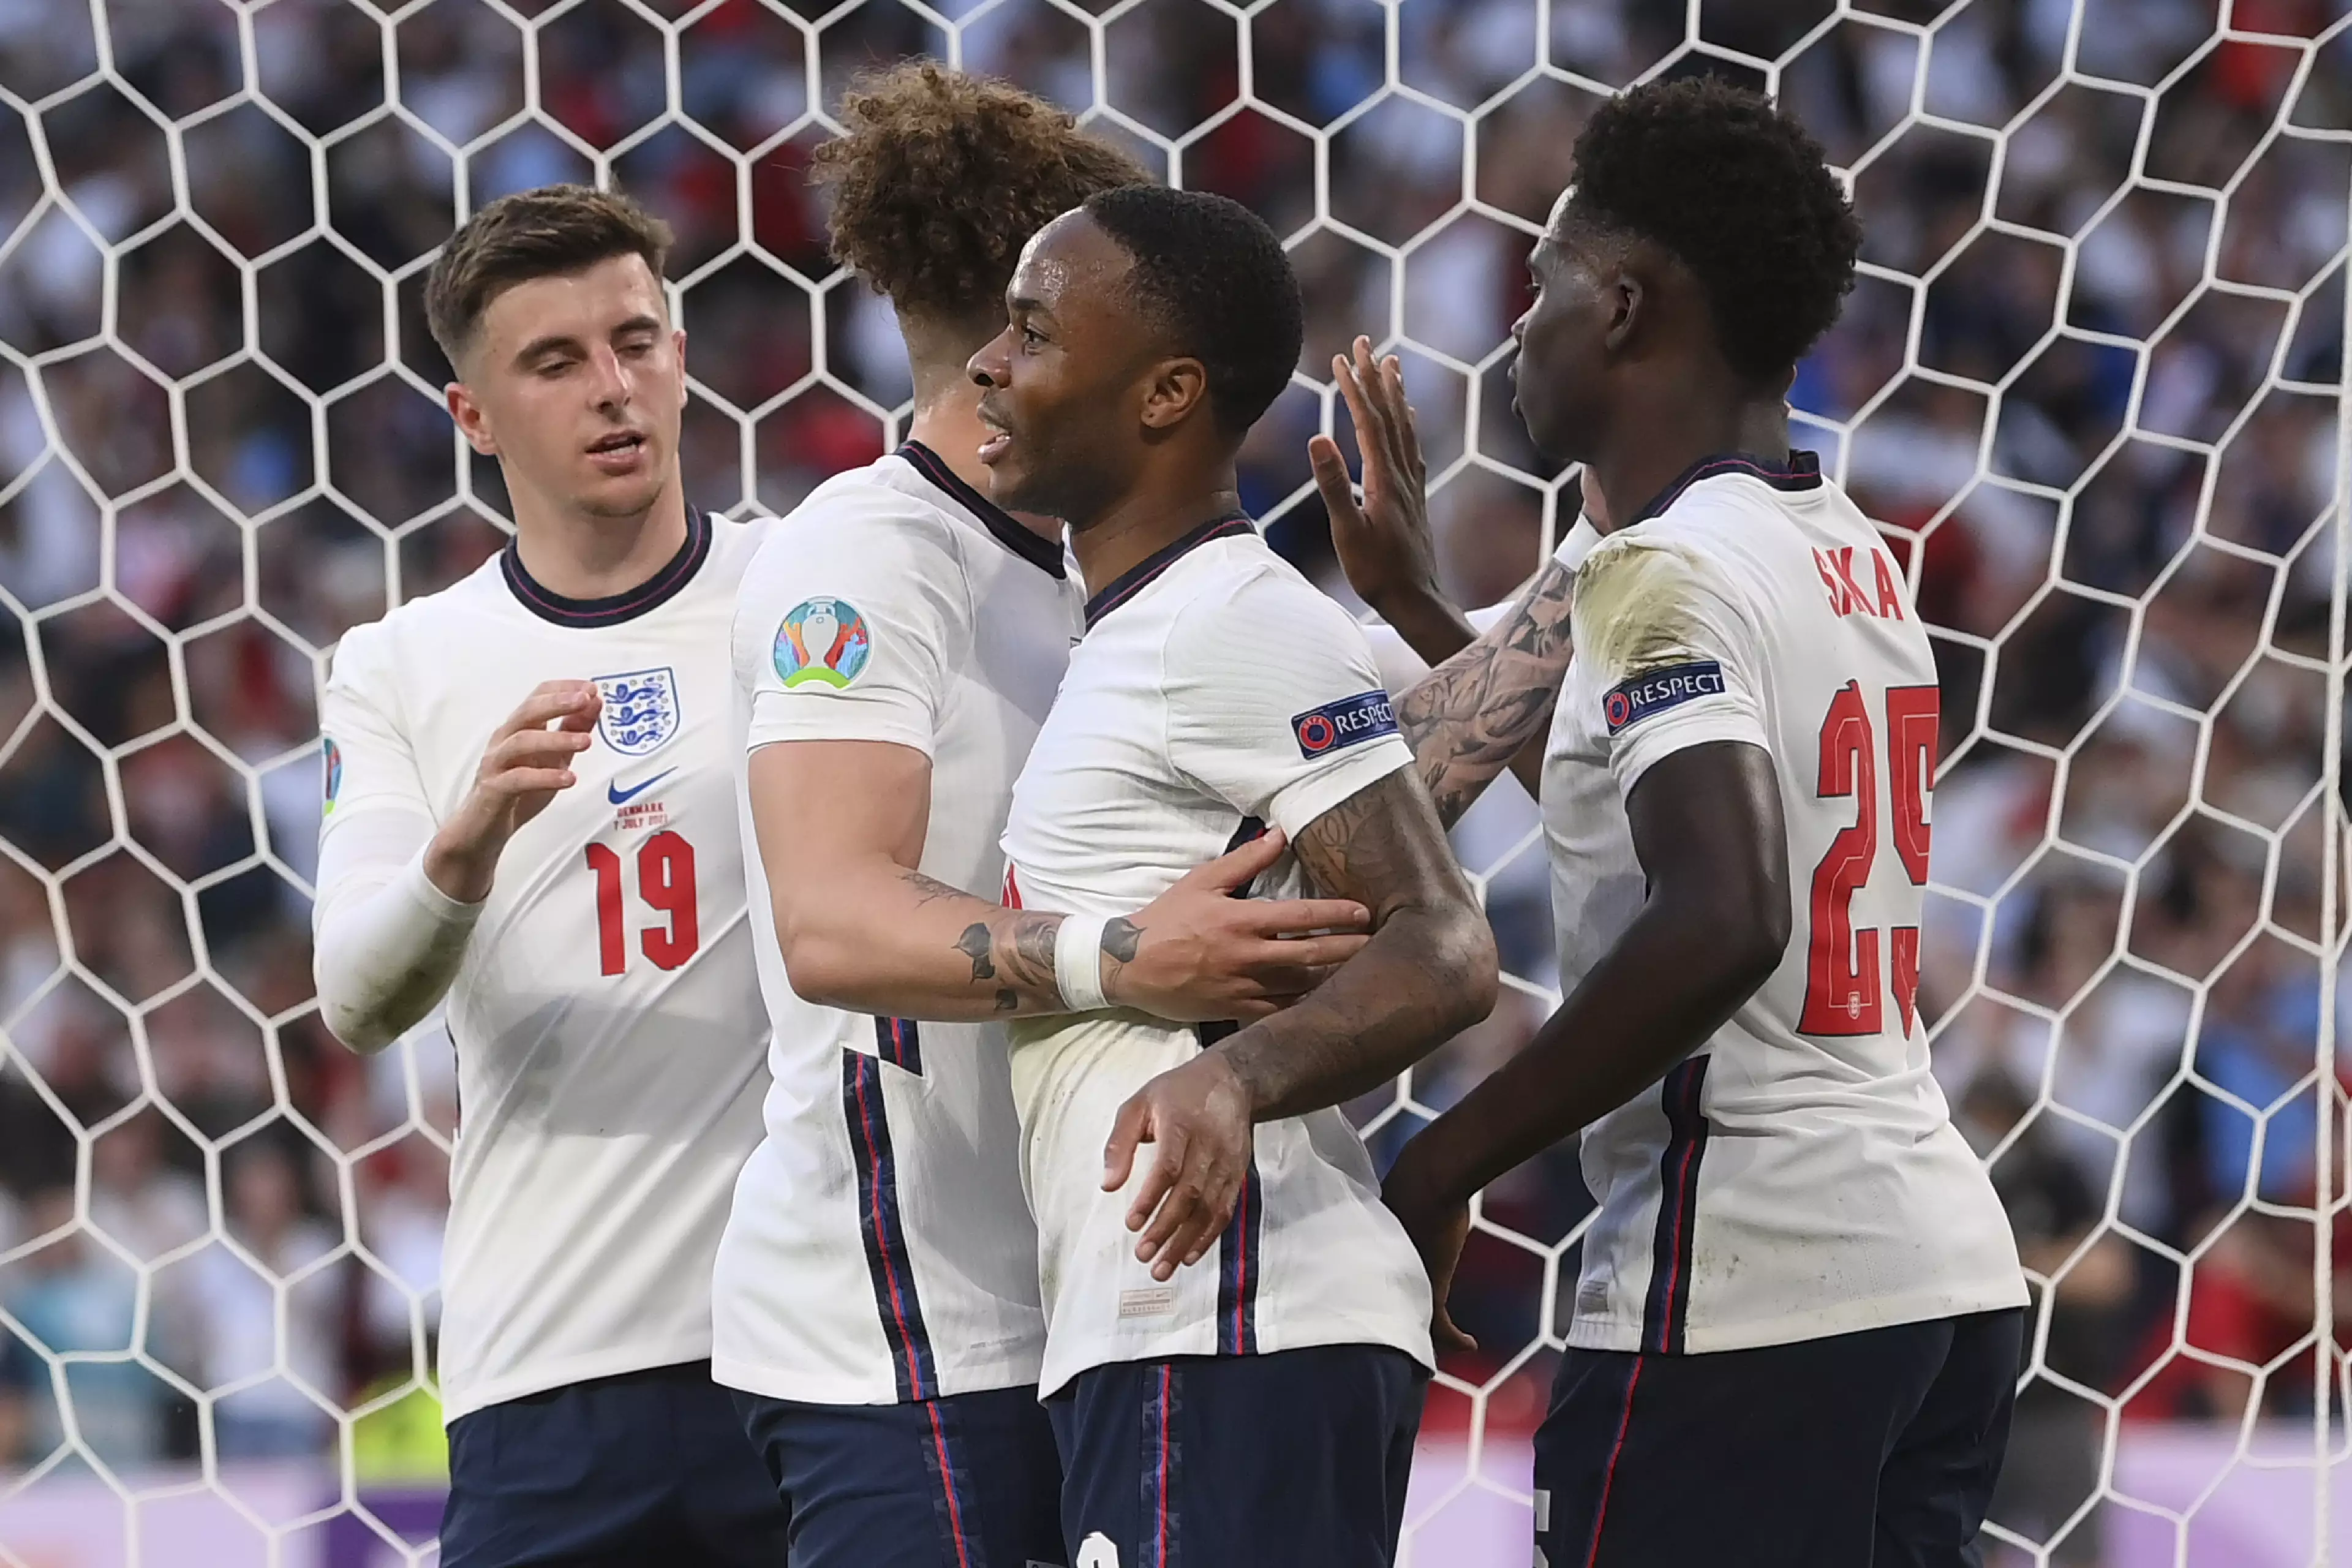 England beat Denmark in the semi-final of Euro 2020.